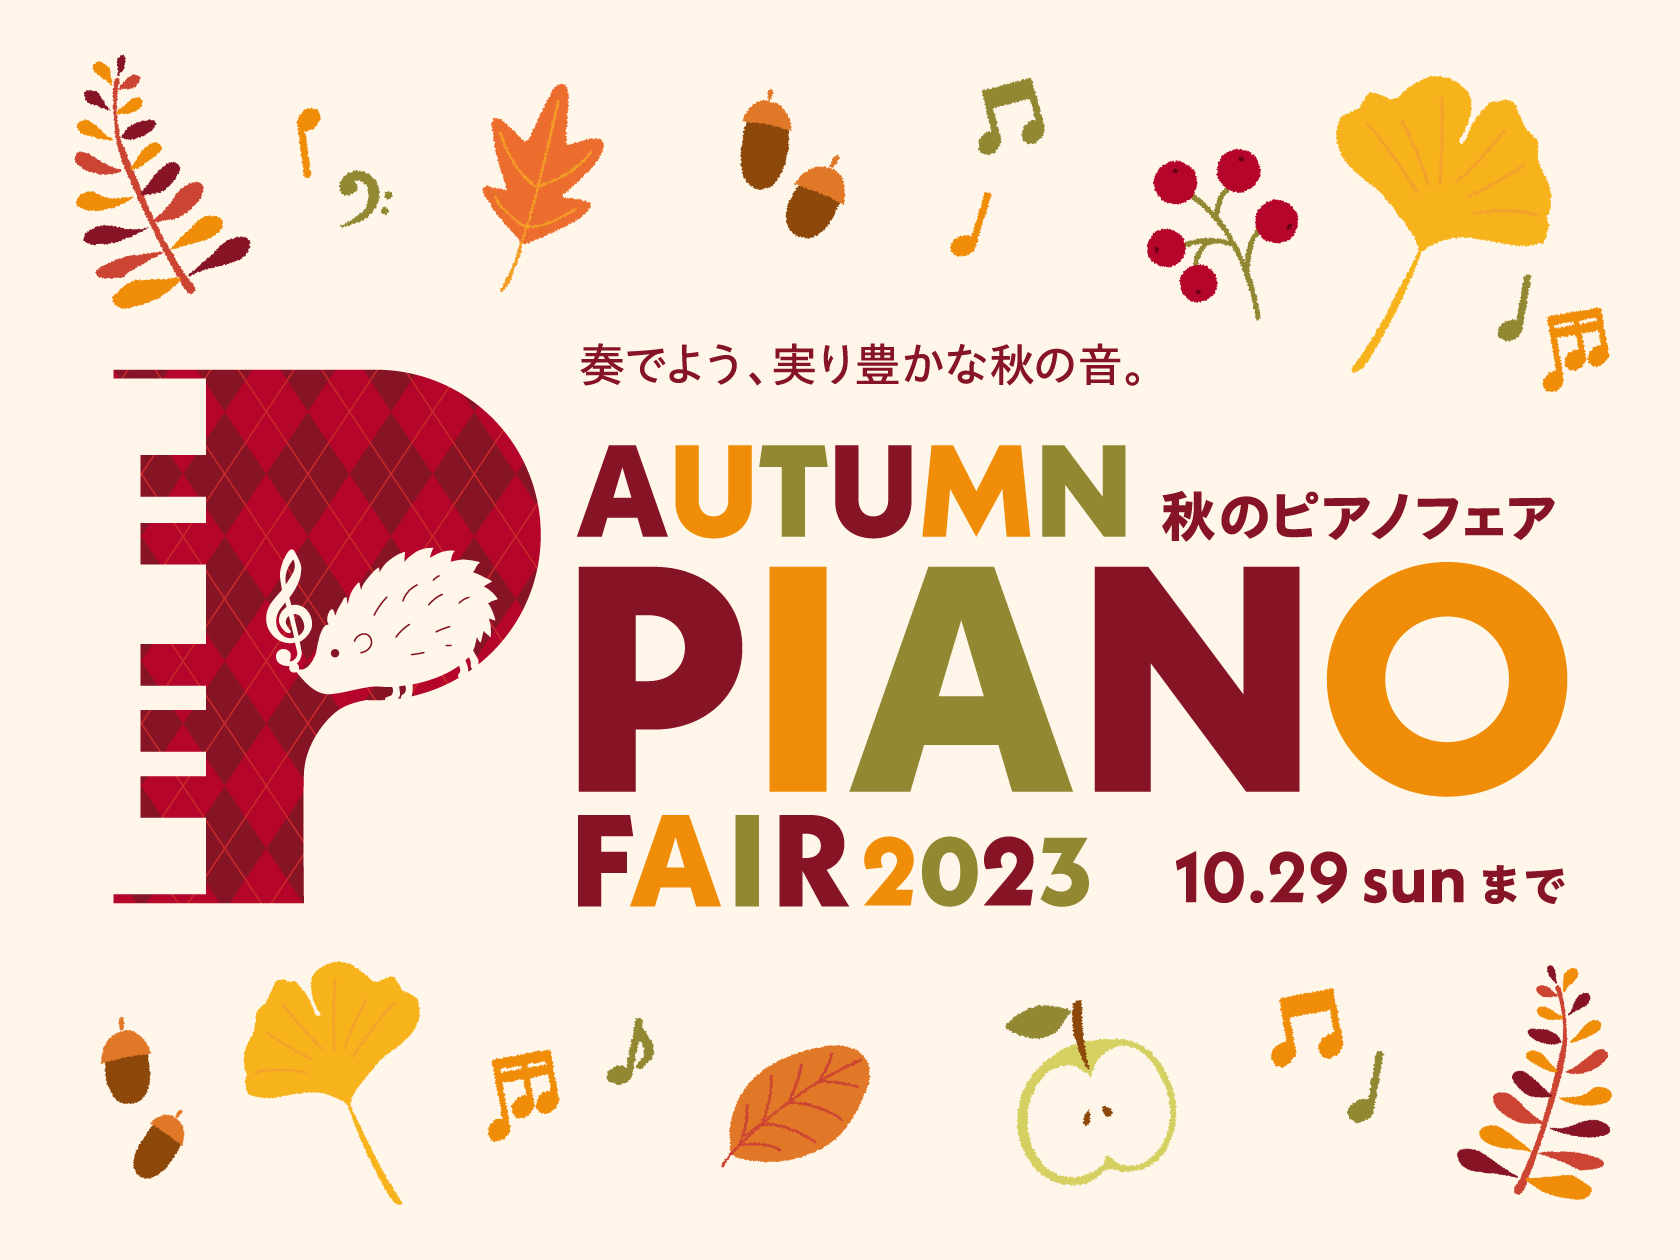 CONTENTS期間内に対象商品ご購入で特典がもらえます！CASIORolandKAWAIYAMAHAKORG期間内に対象商品ご購入で特典がもらえます！ こんにちは。ピアノ担当の日野です！島村楽器イオンモール太田店では9月9日(土)～10月29日(日)までの期間、秋のピアノフェア2023を開催中です […]